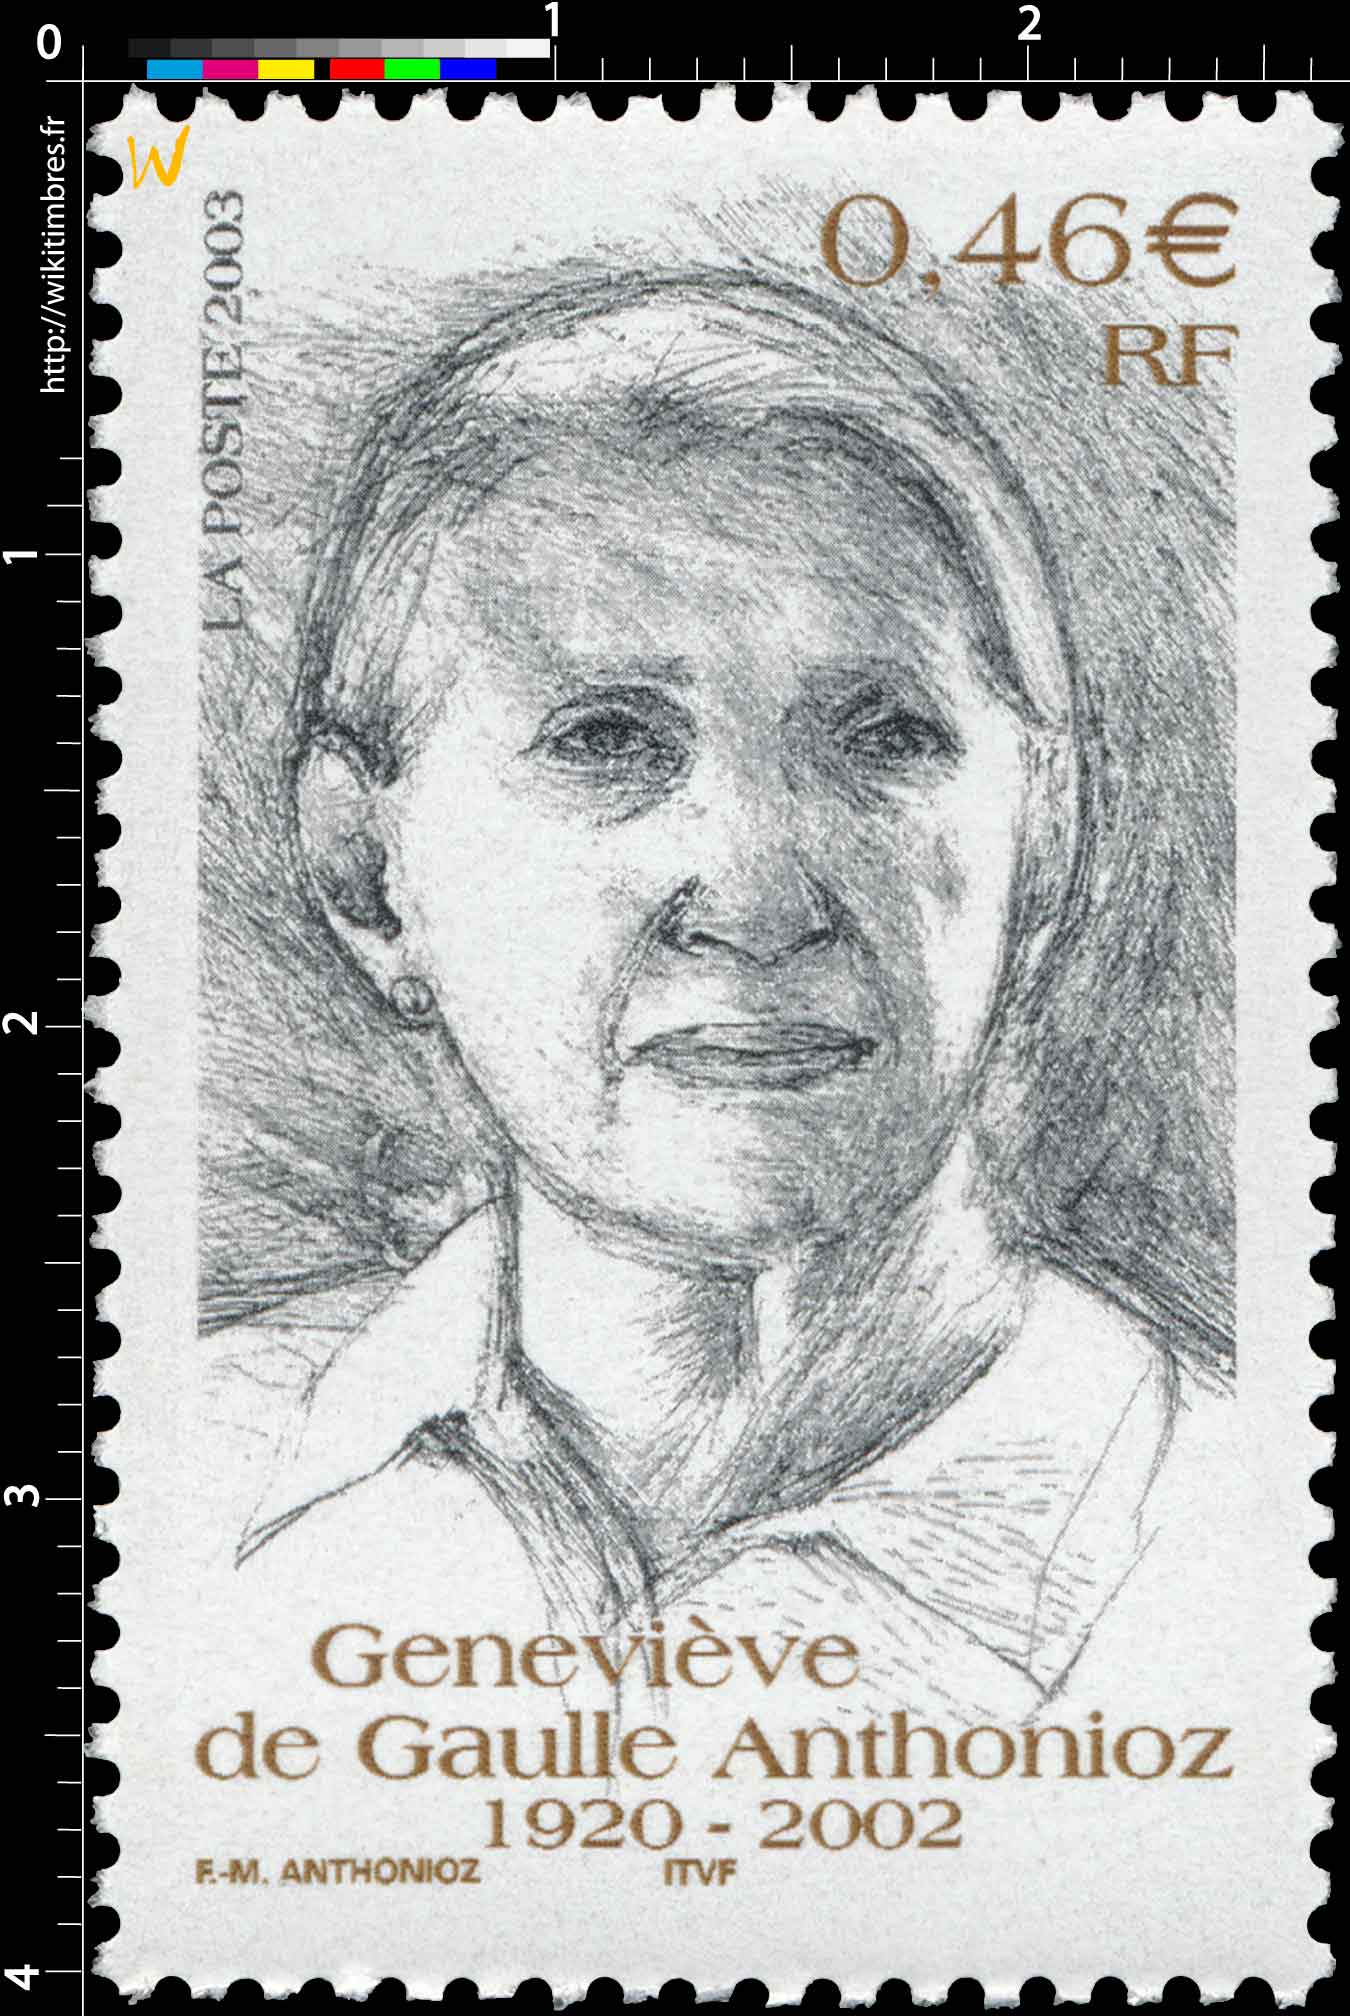 2003 Geneviève de Gaulle Anthonioz 1920-2002